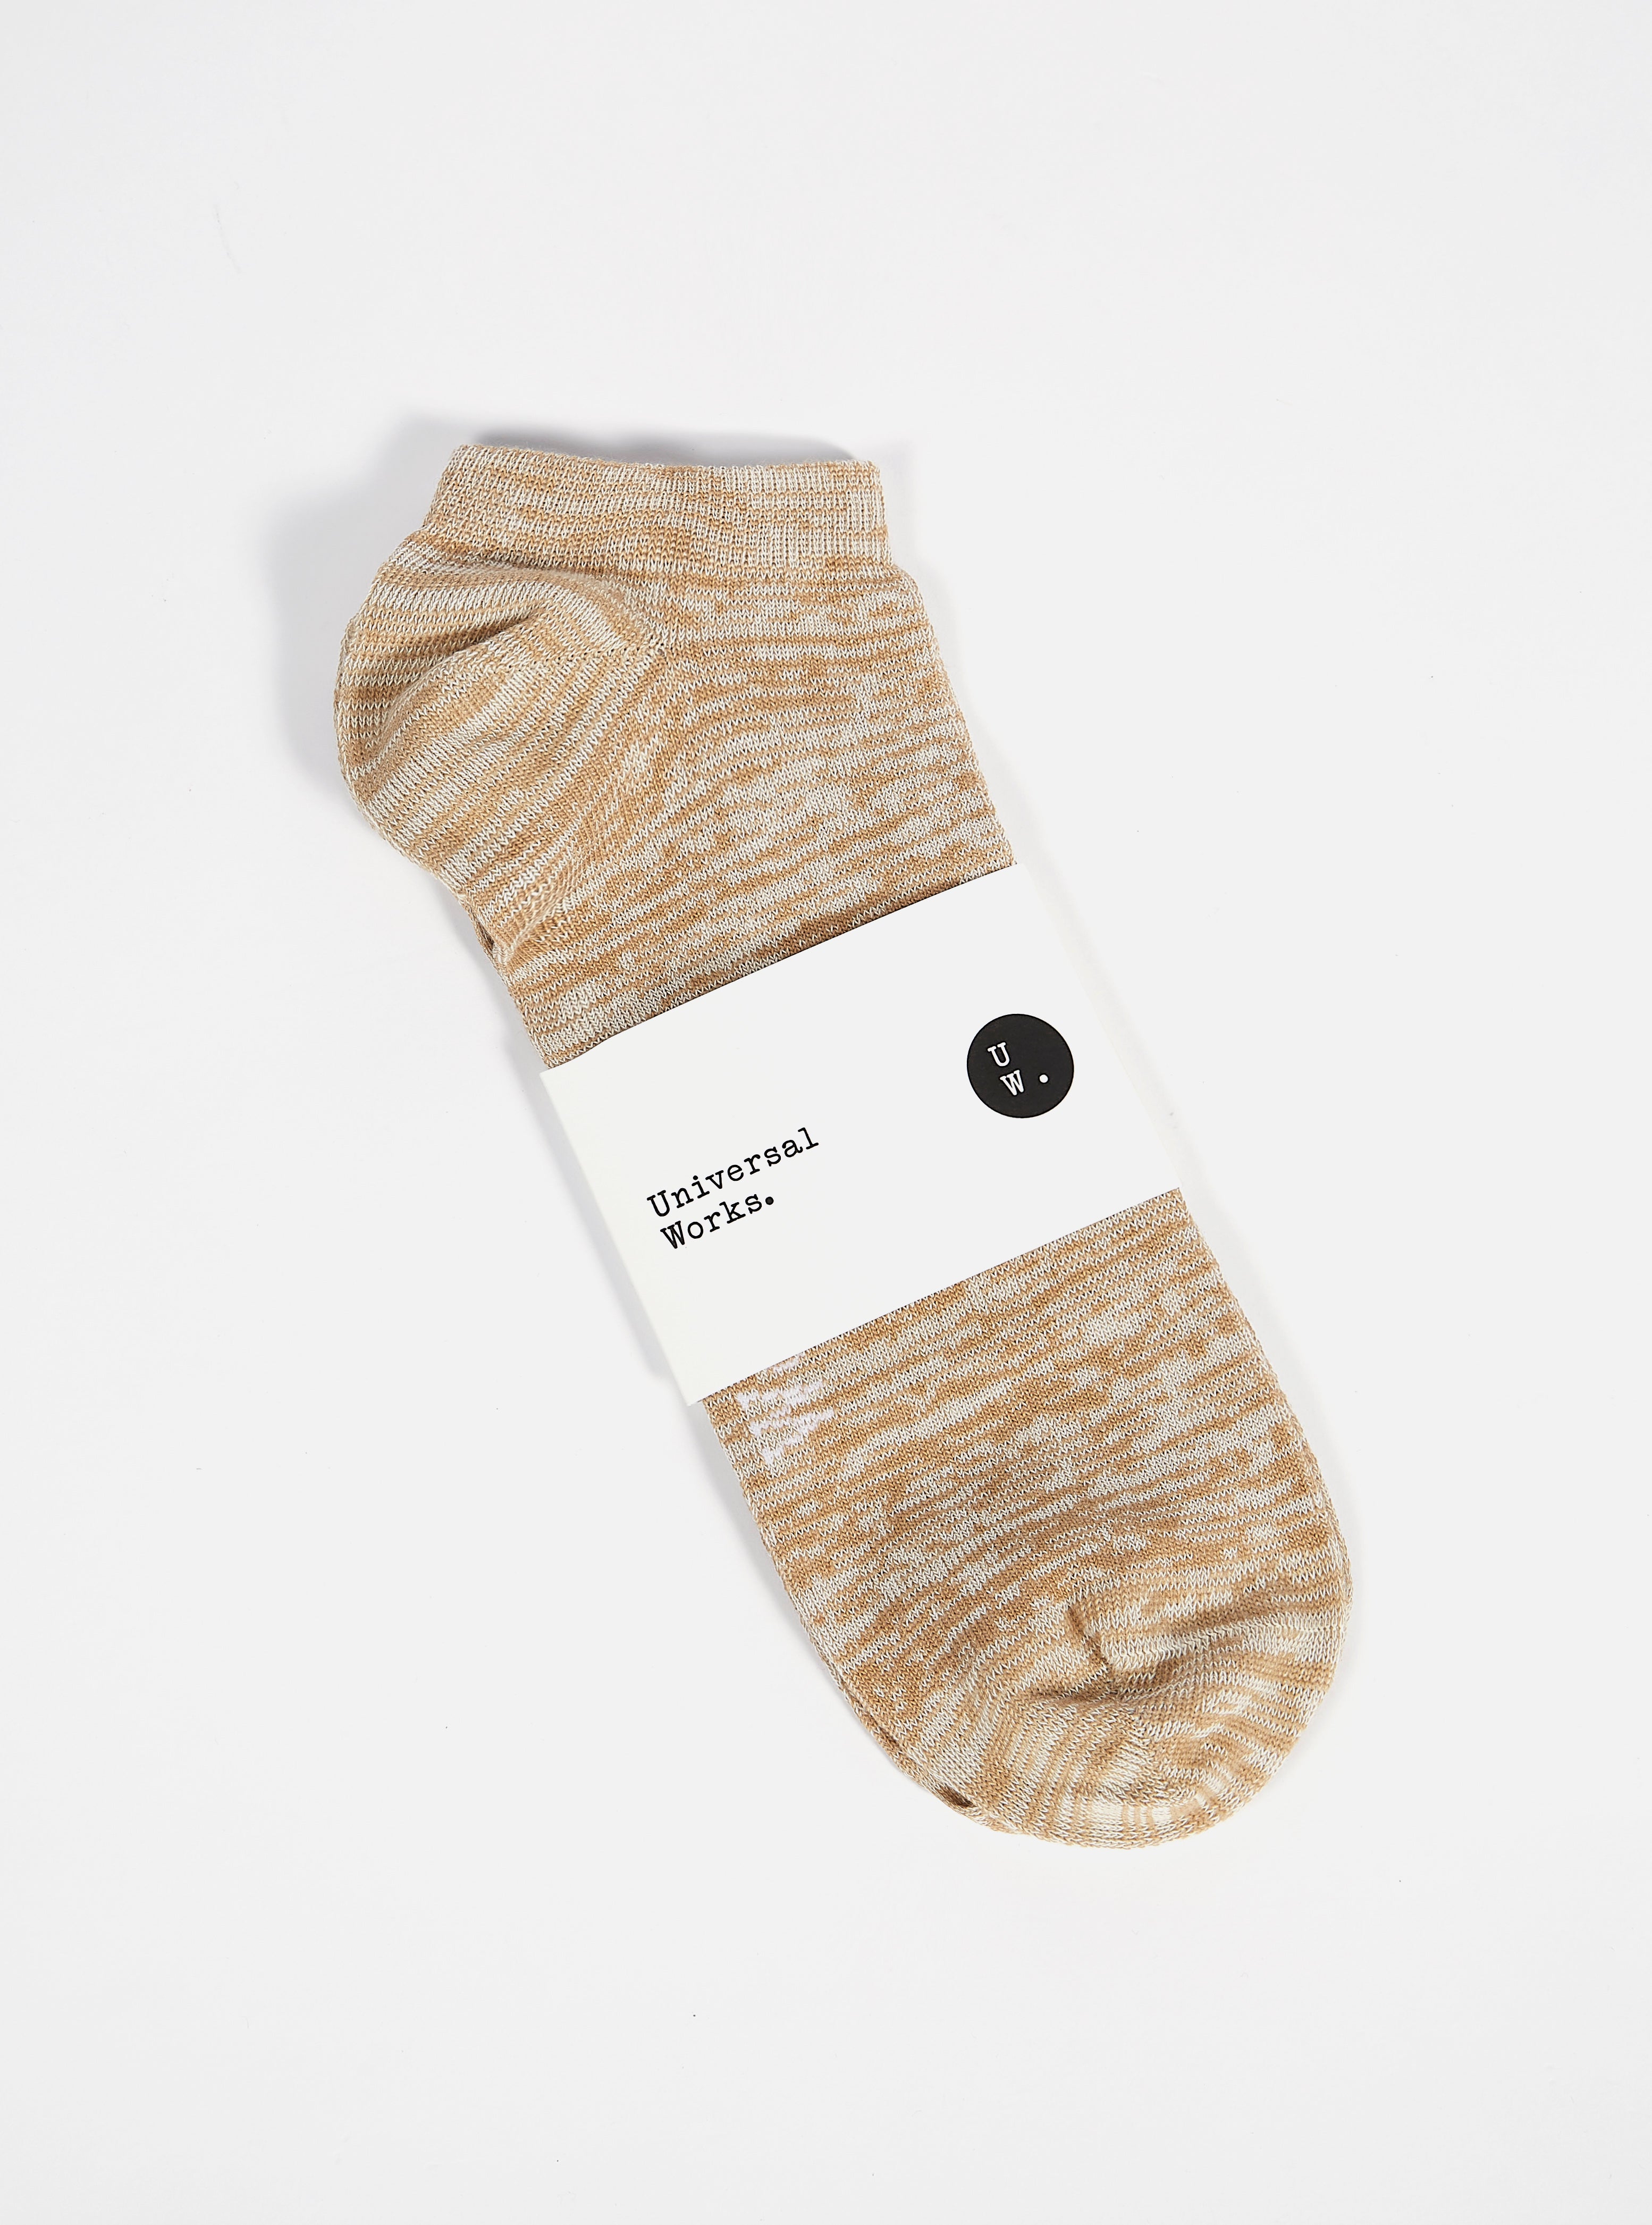 Universal Works Ankle Slub Sock in Dark Sand Slub Knit